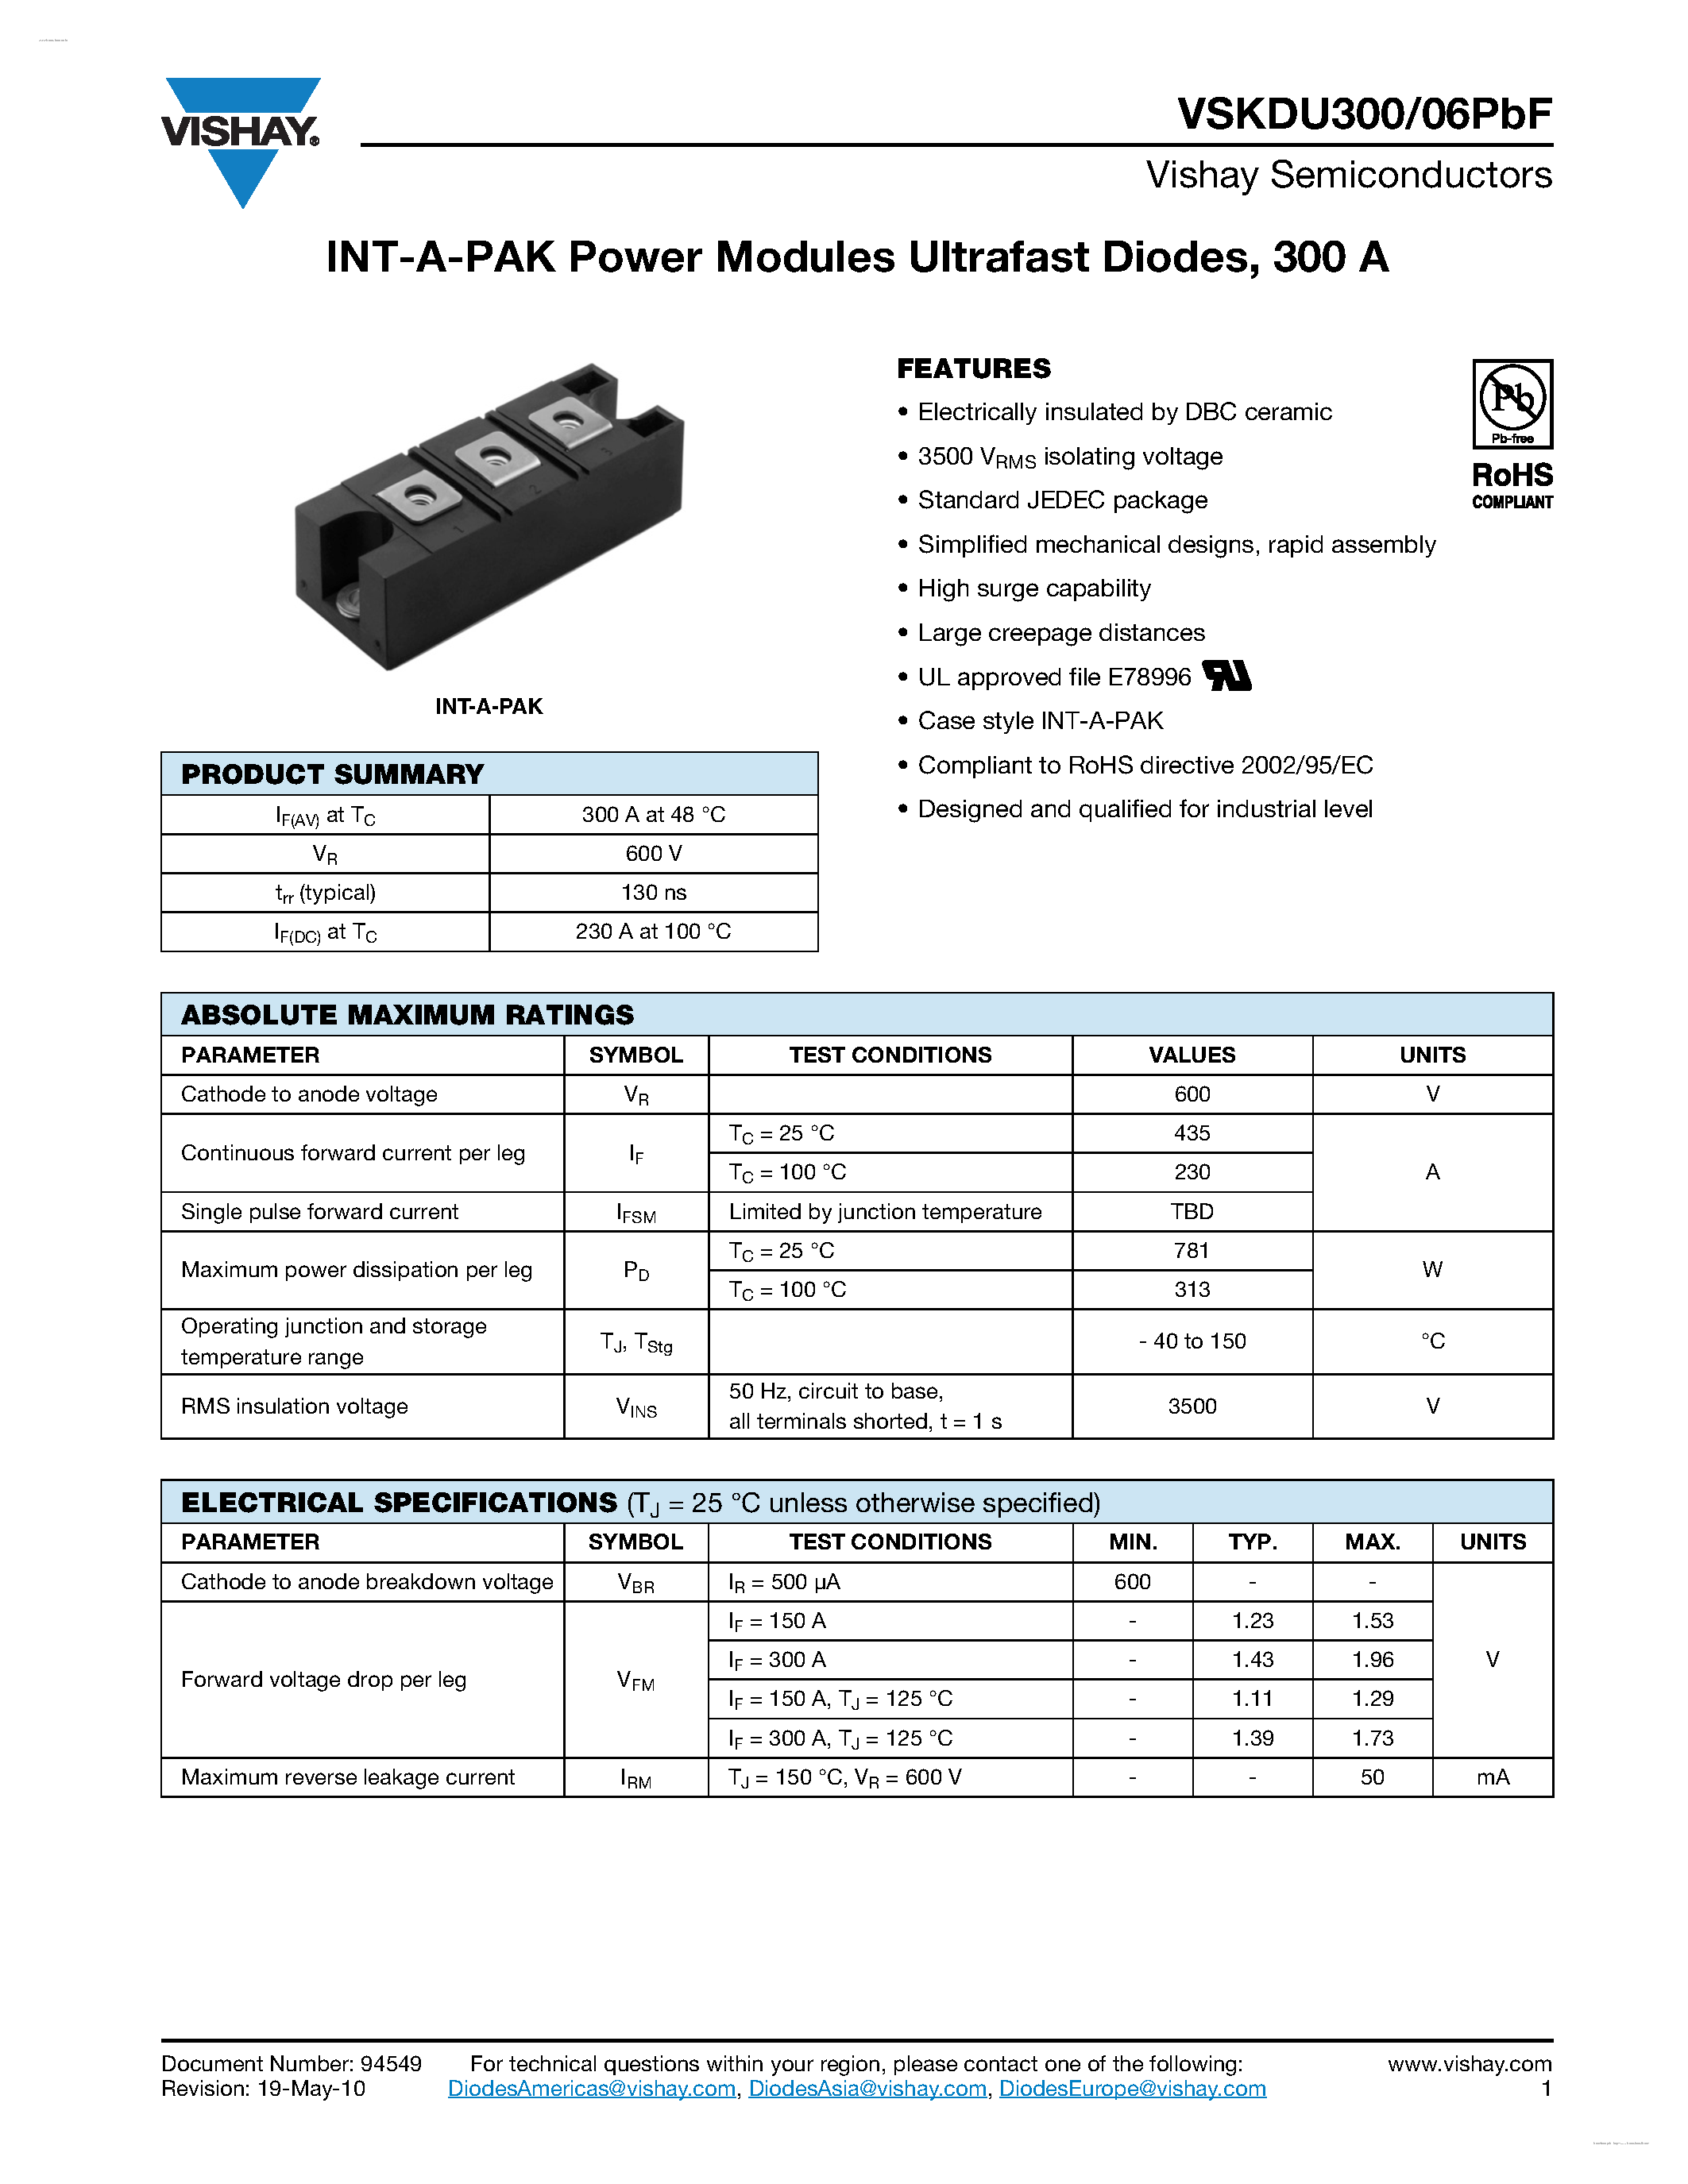 Datasheet VSKDU300/06PBF - INT-A-PAK Power Modules Ultrafast Diodes page 1